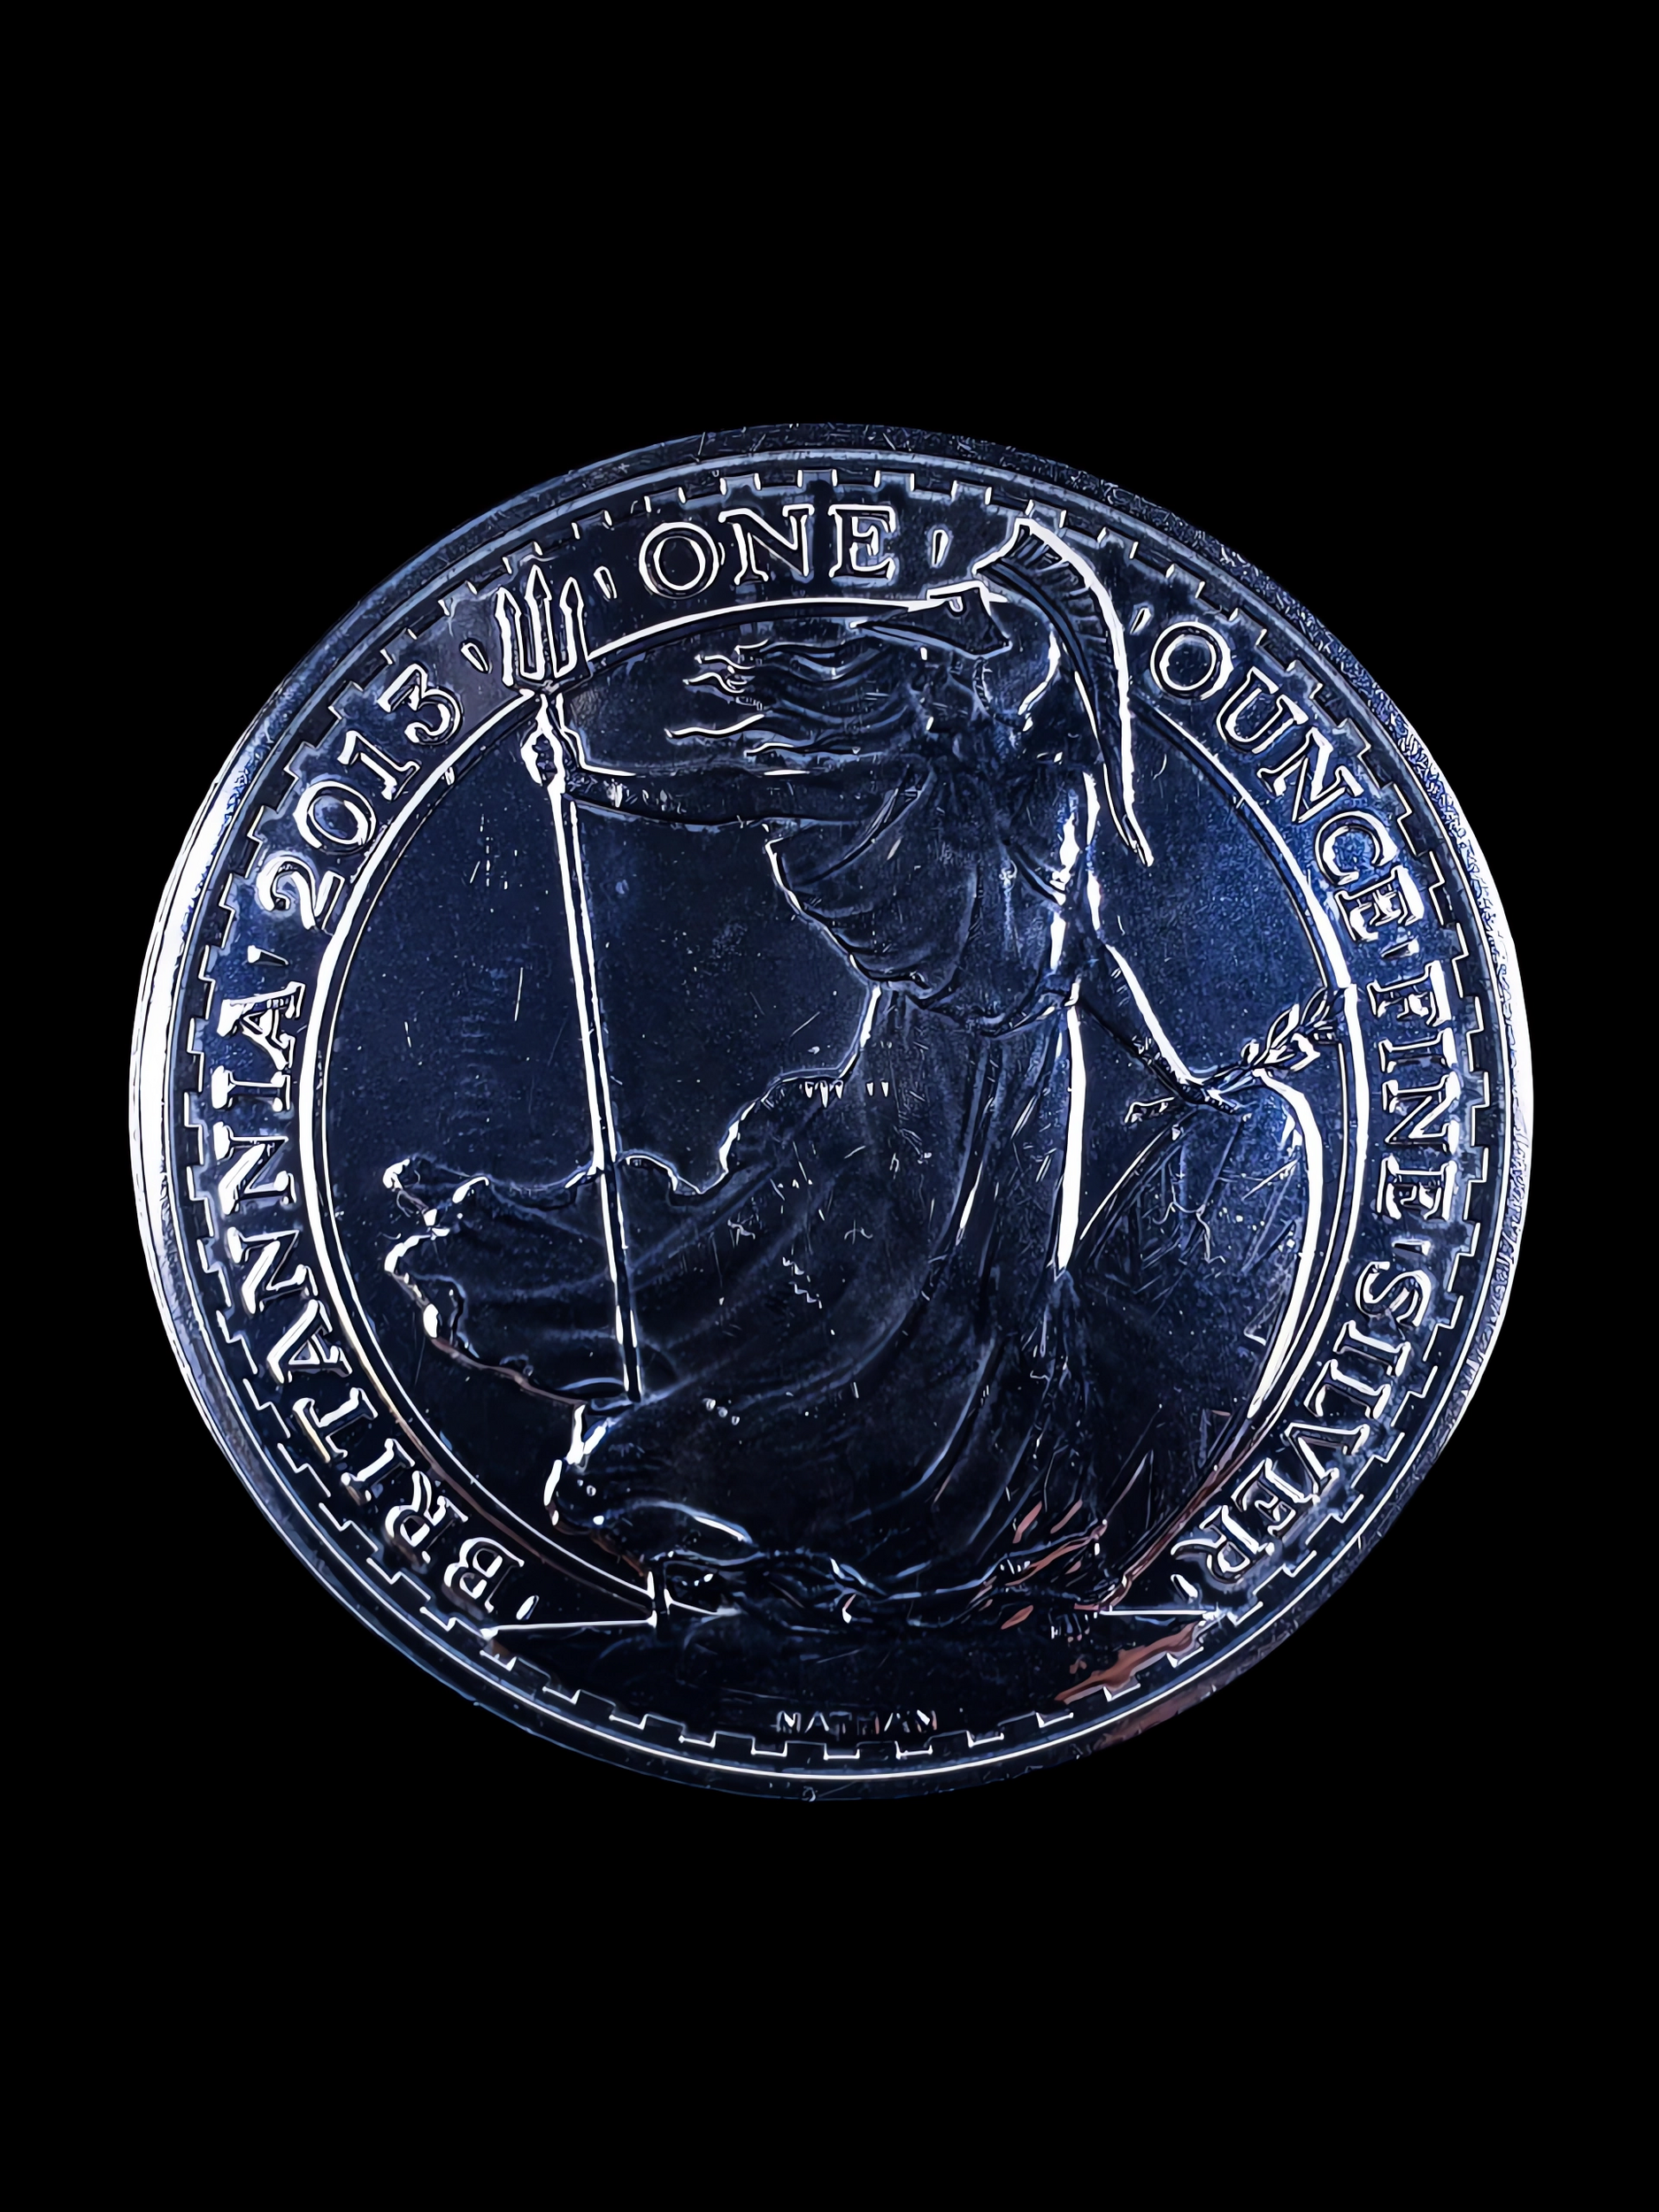 2013 Great Britain 2 Pound Silver Bullion Coin (1oz) – Queen Elizabeth II Royal Mint